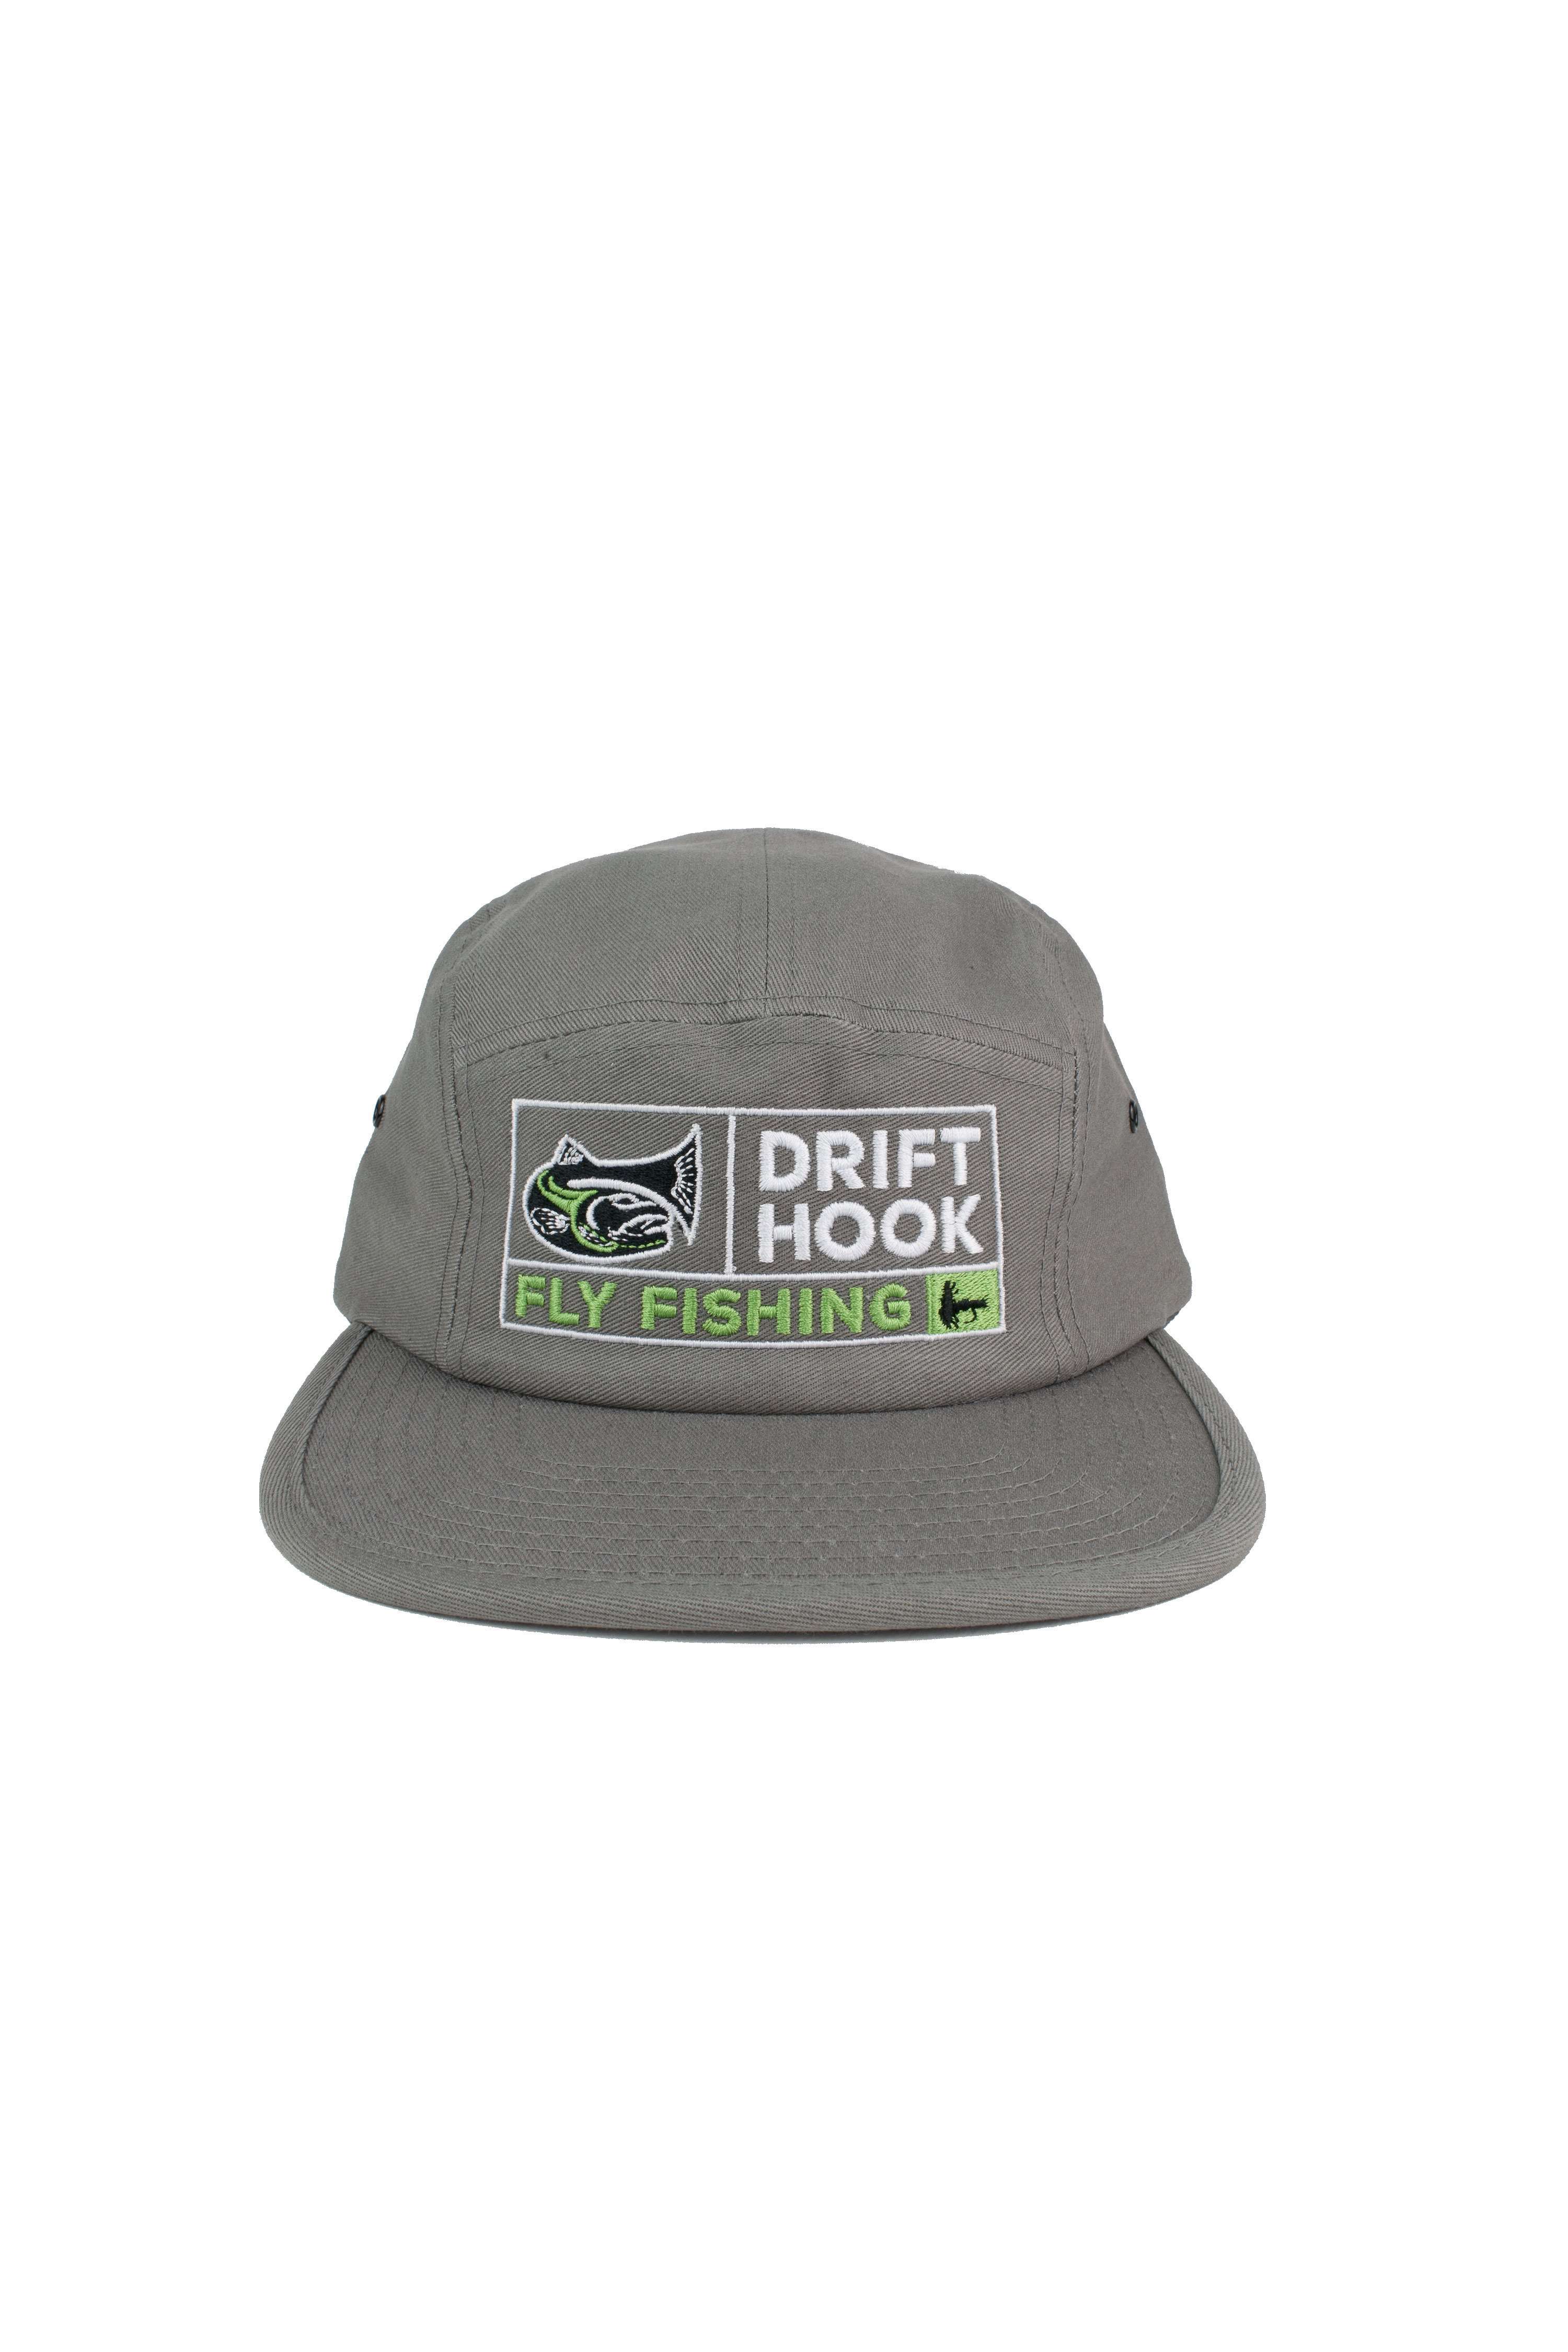 Drifthook Camper Cap—Gray with Box Logo - Drifthook